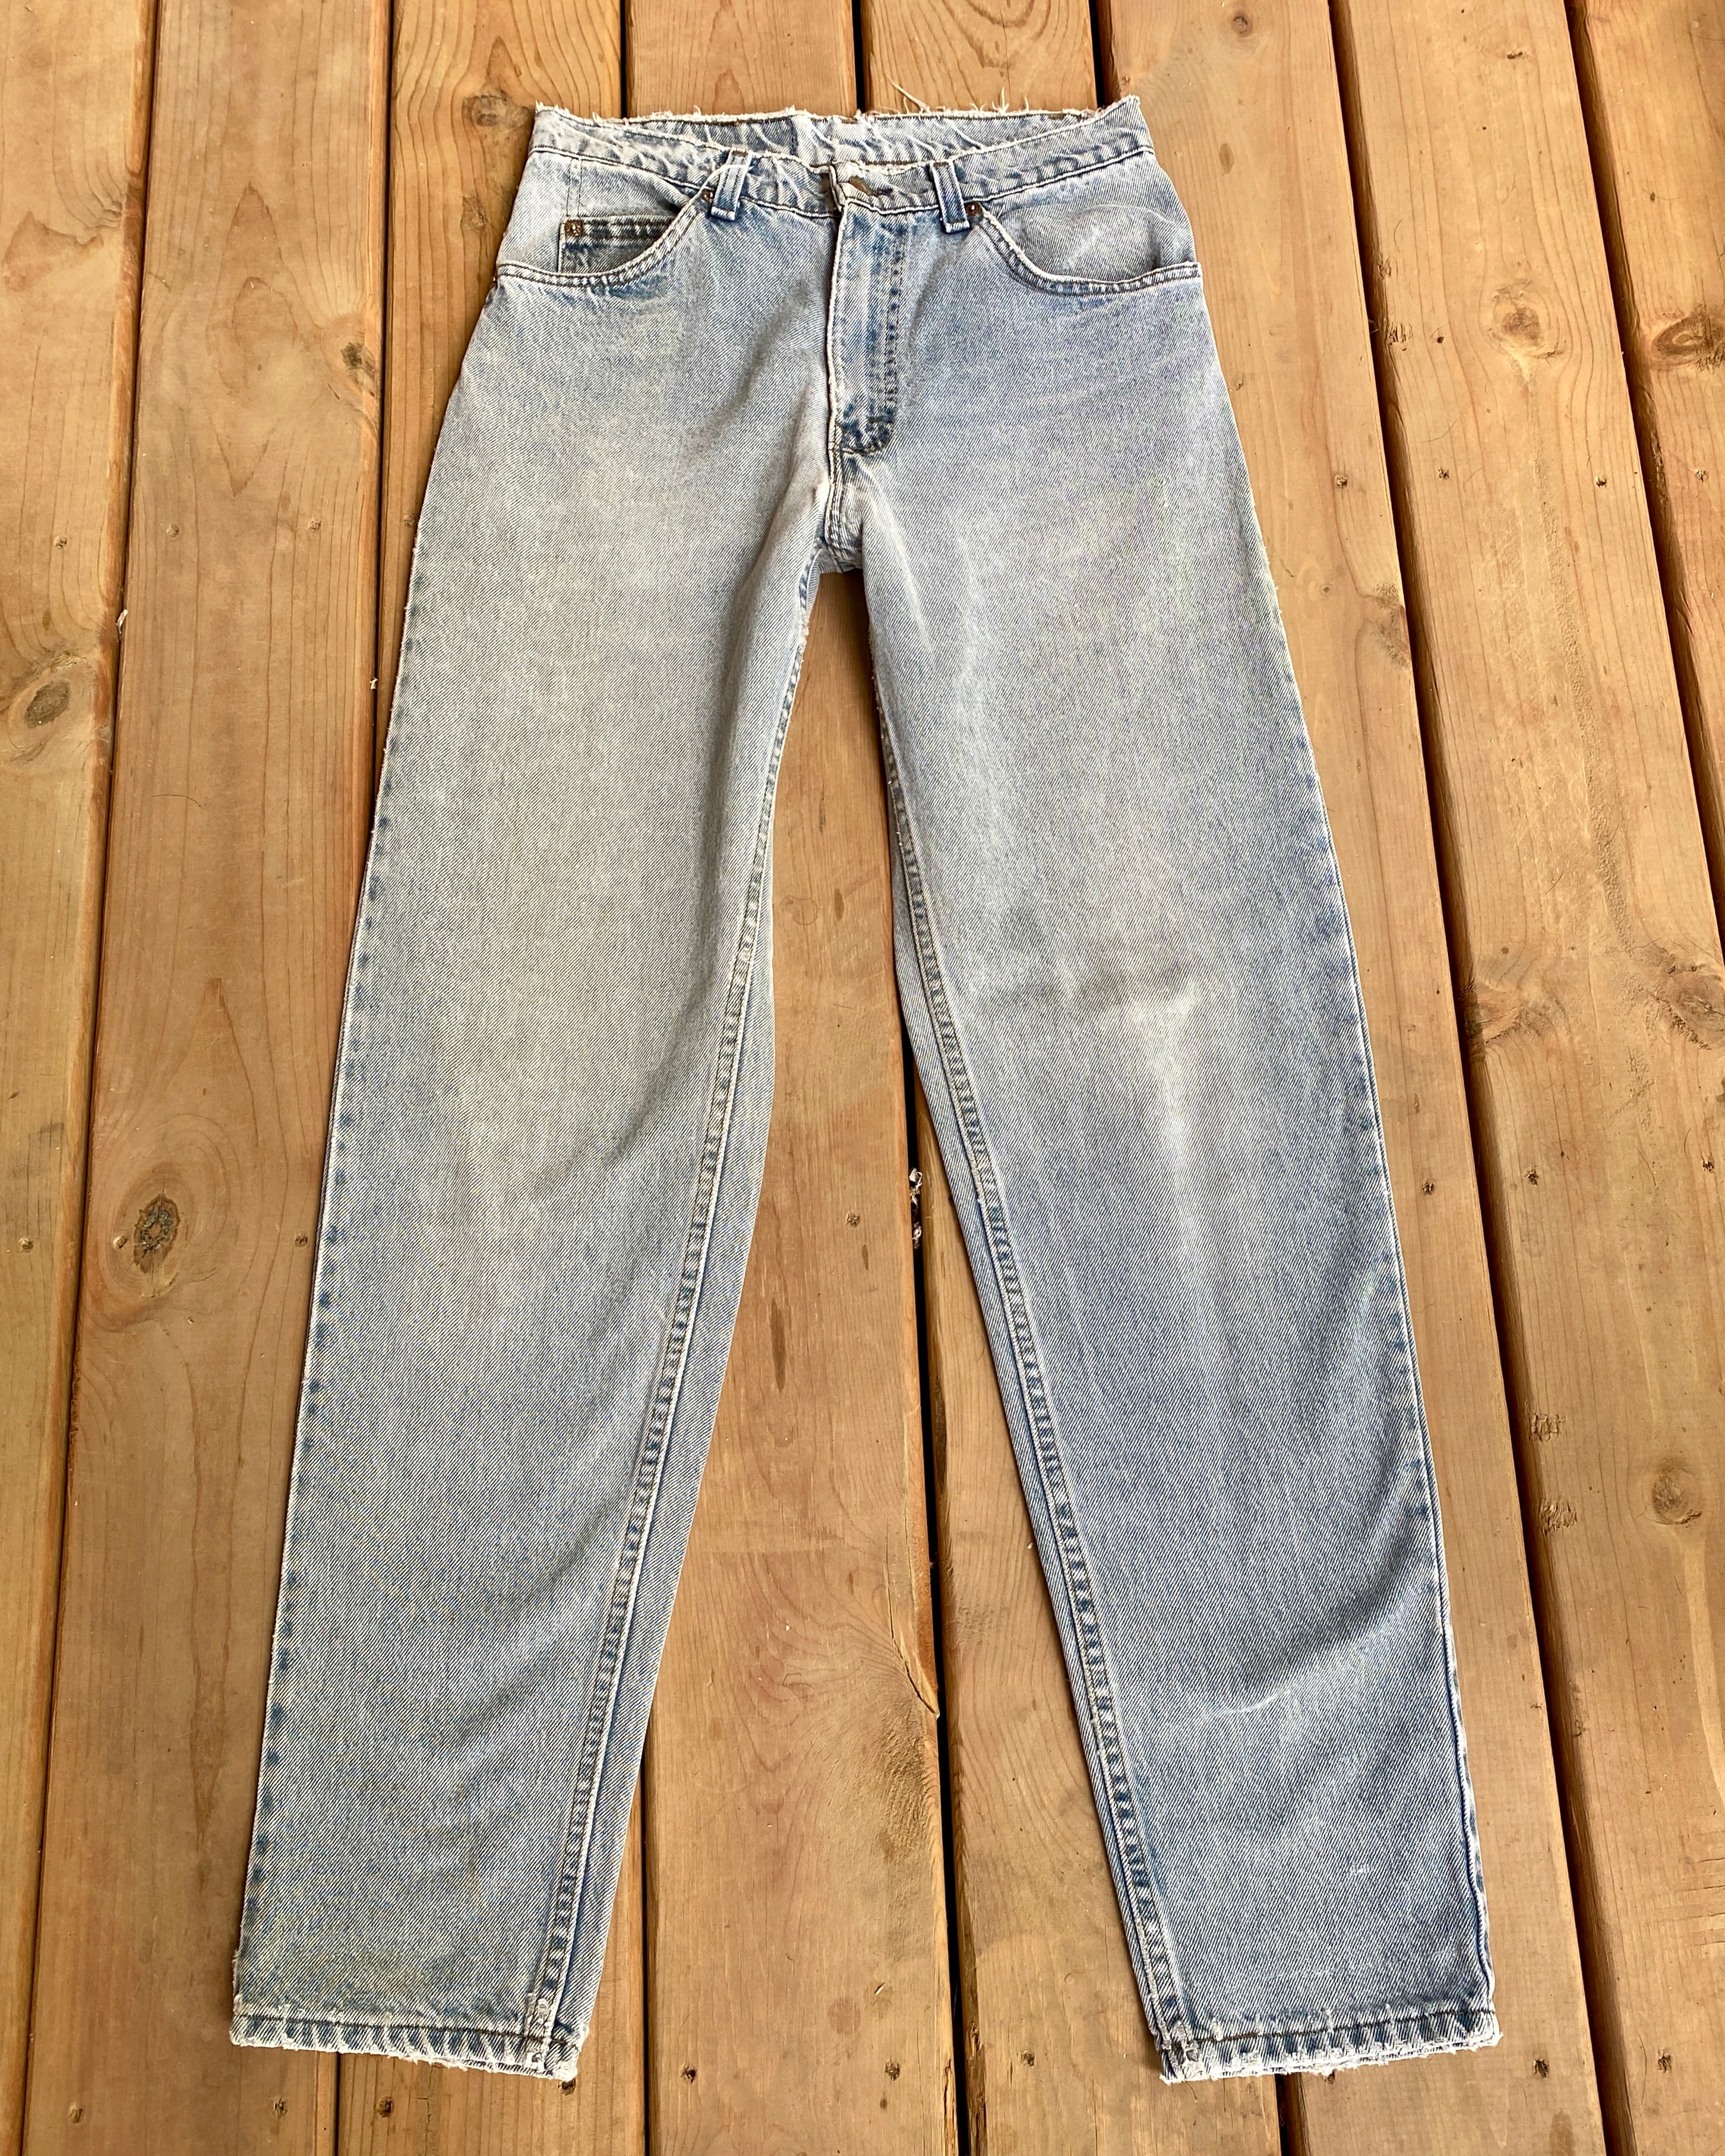 Vintage 1980s Black Tab Levis 550 Light Grey Wash Jeans size 30